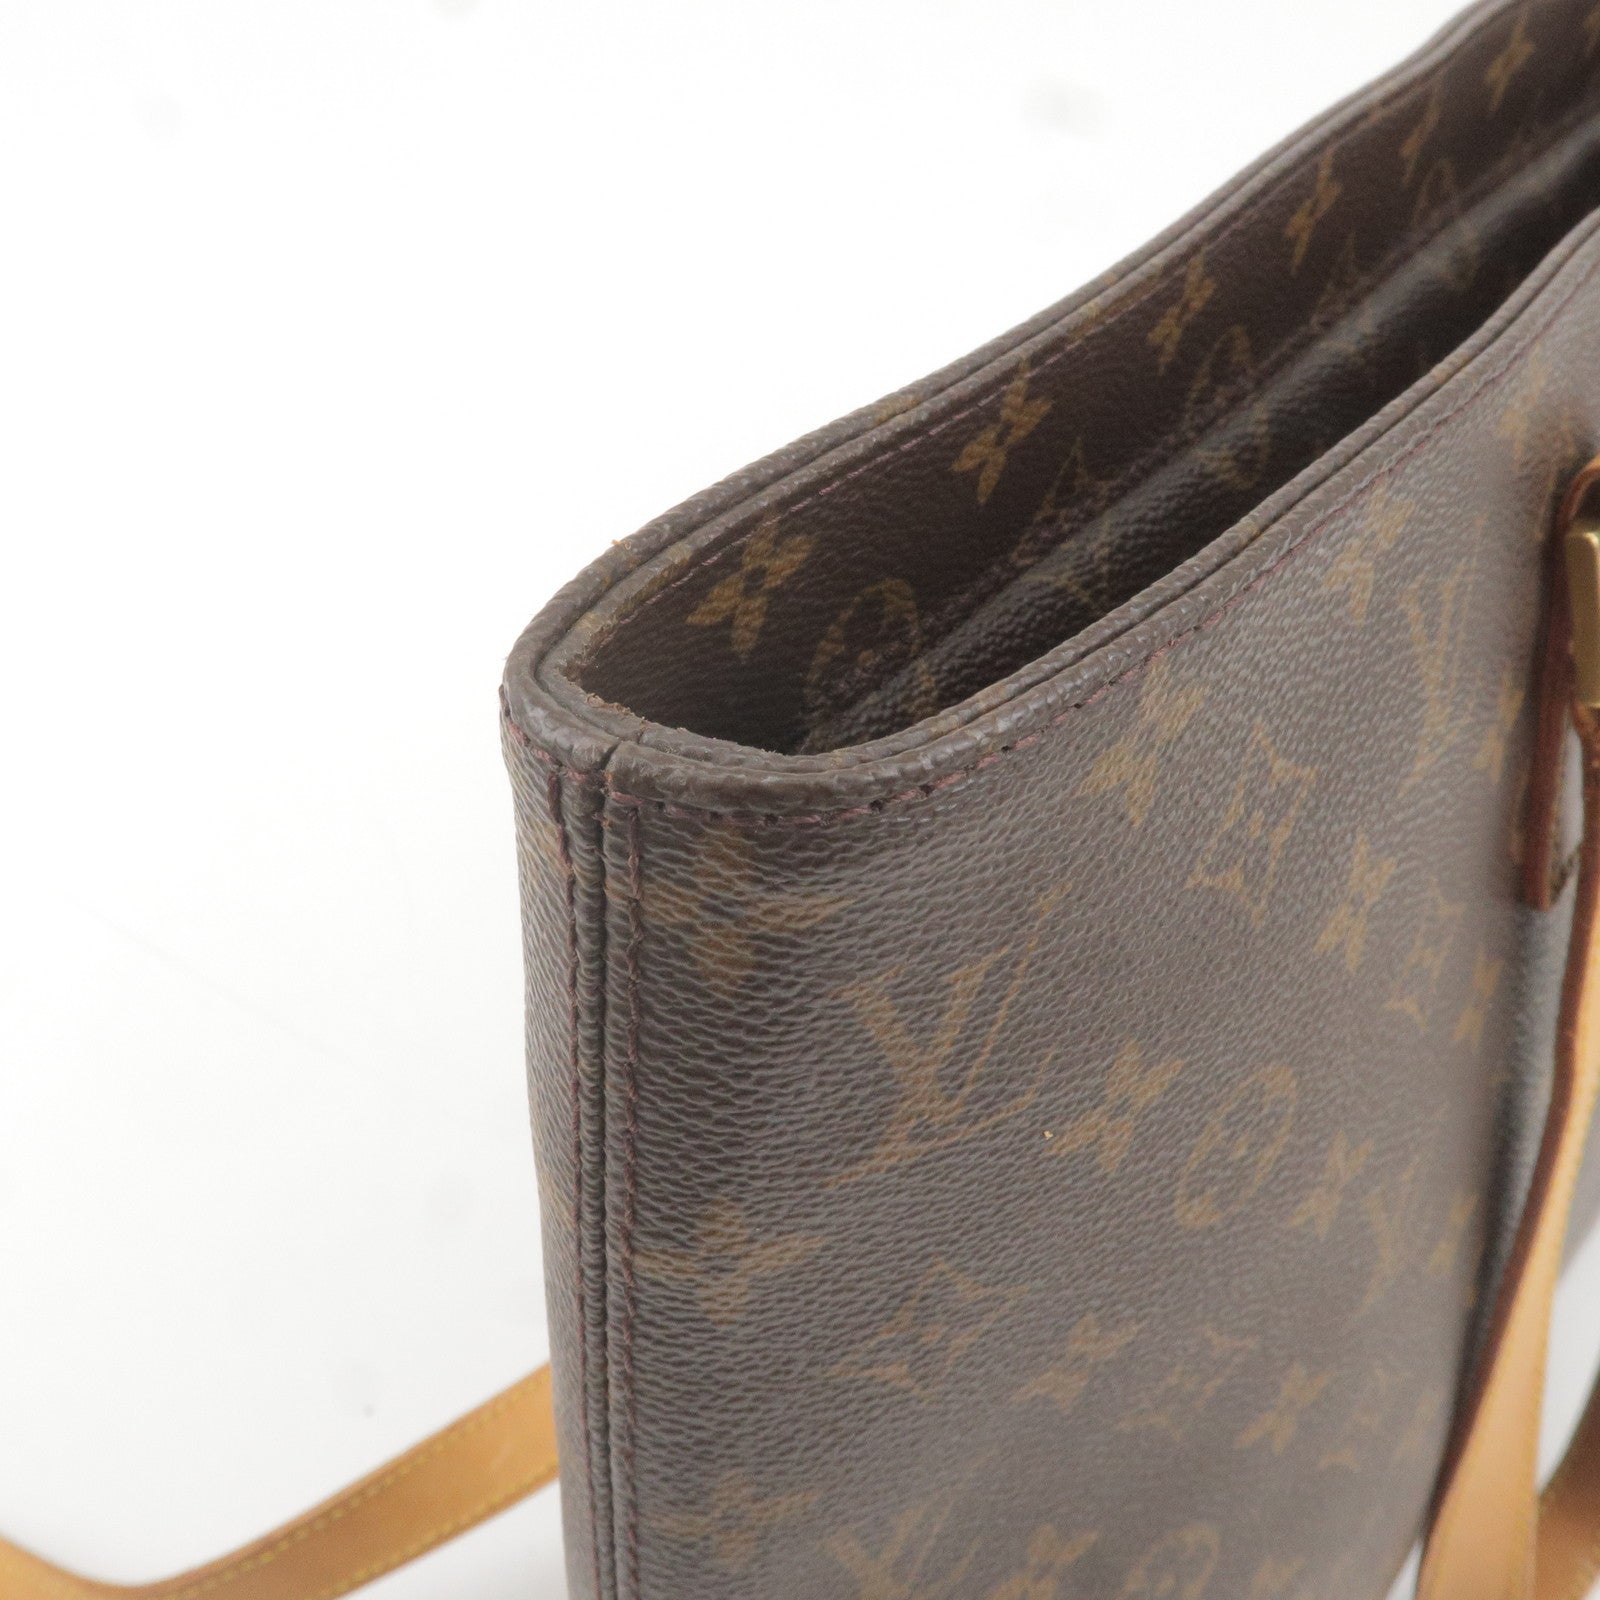 Louis Vuitton Luco Tote Brown Leather & LV Monogram Canvas Purse Bag  Pocketbook